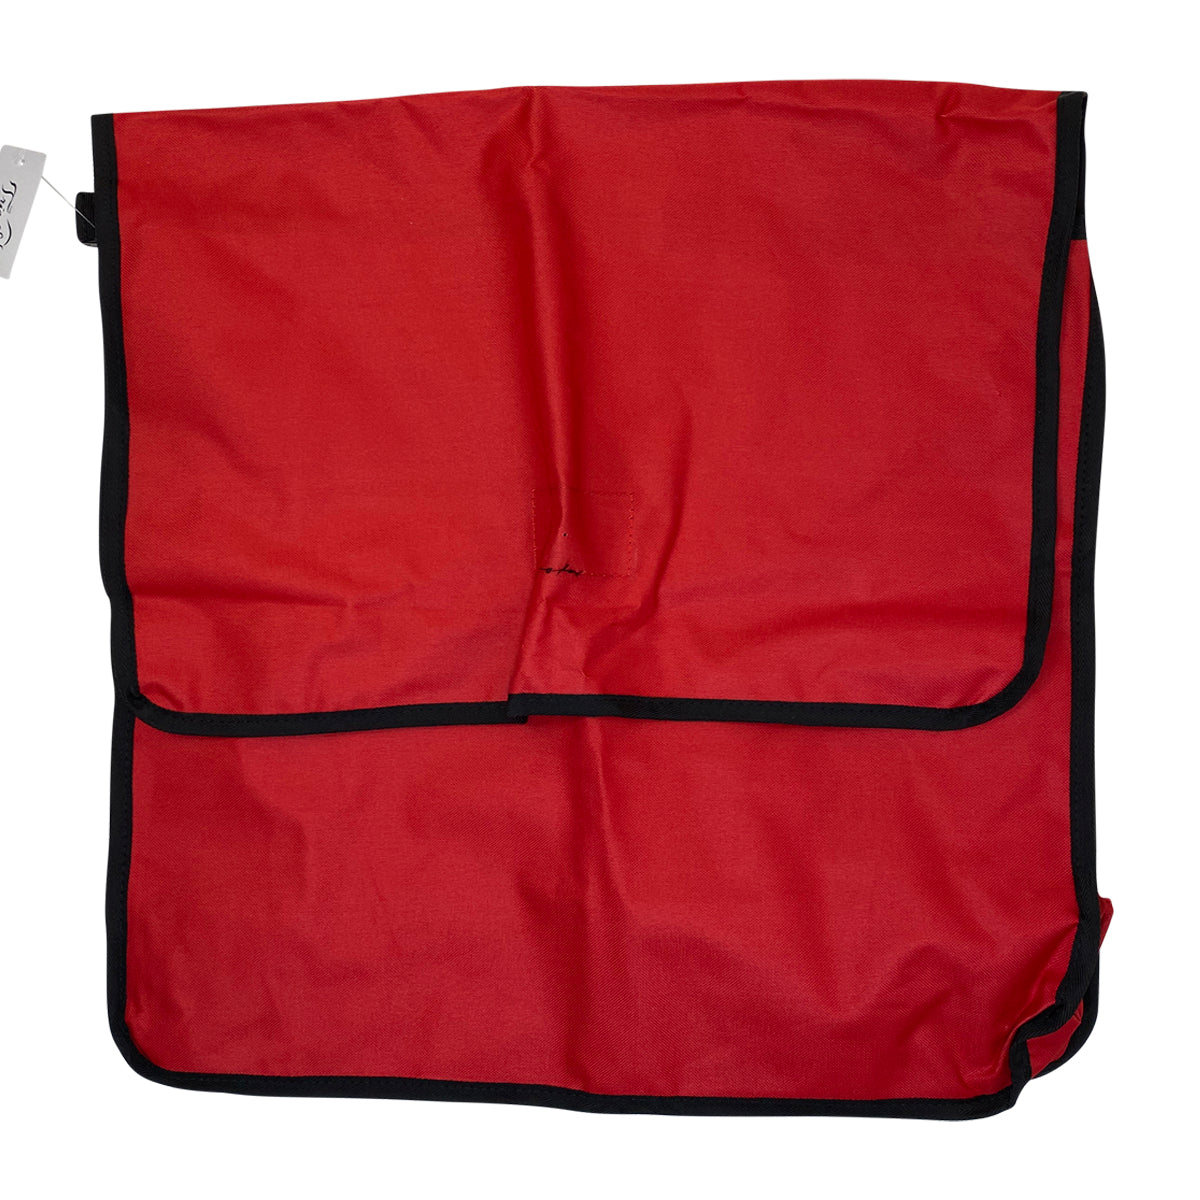 Showman Nylon Blanket Bag in Red